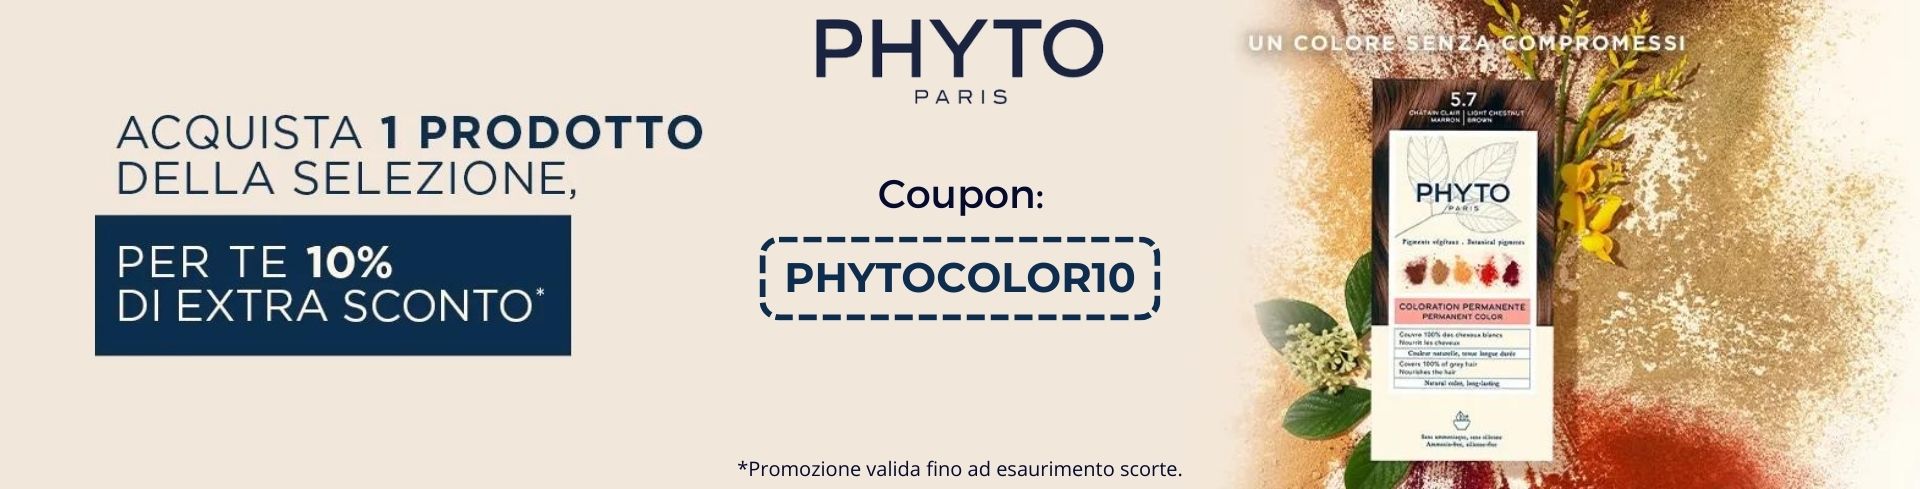 banner promozionale phytocolor 10% extrasconto con il codice coupon!  desktop